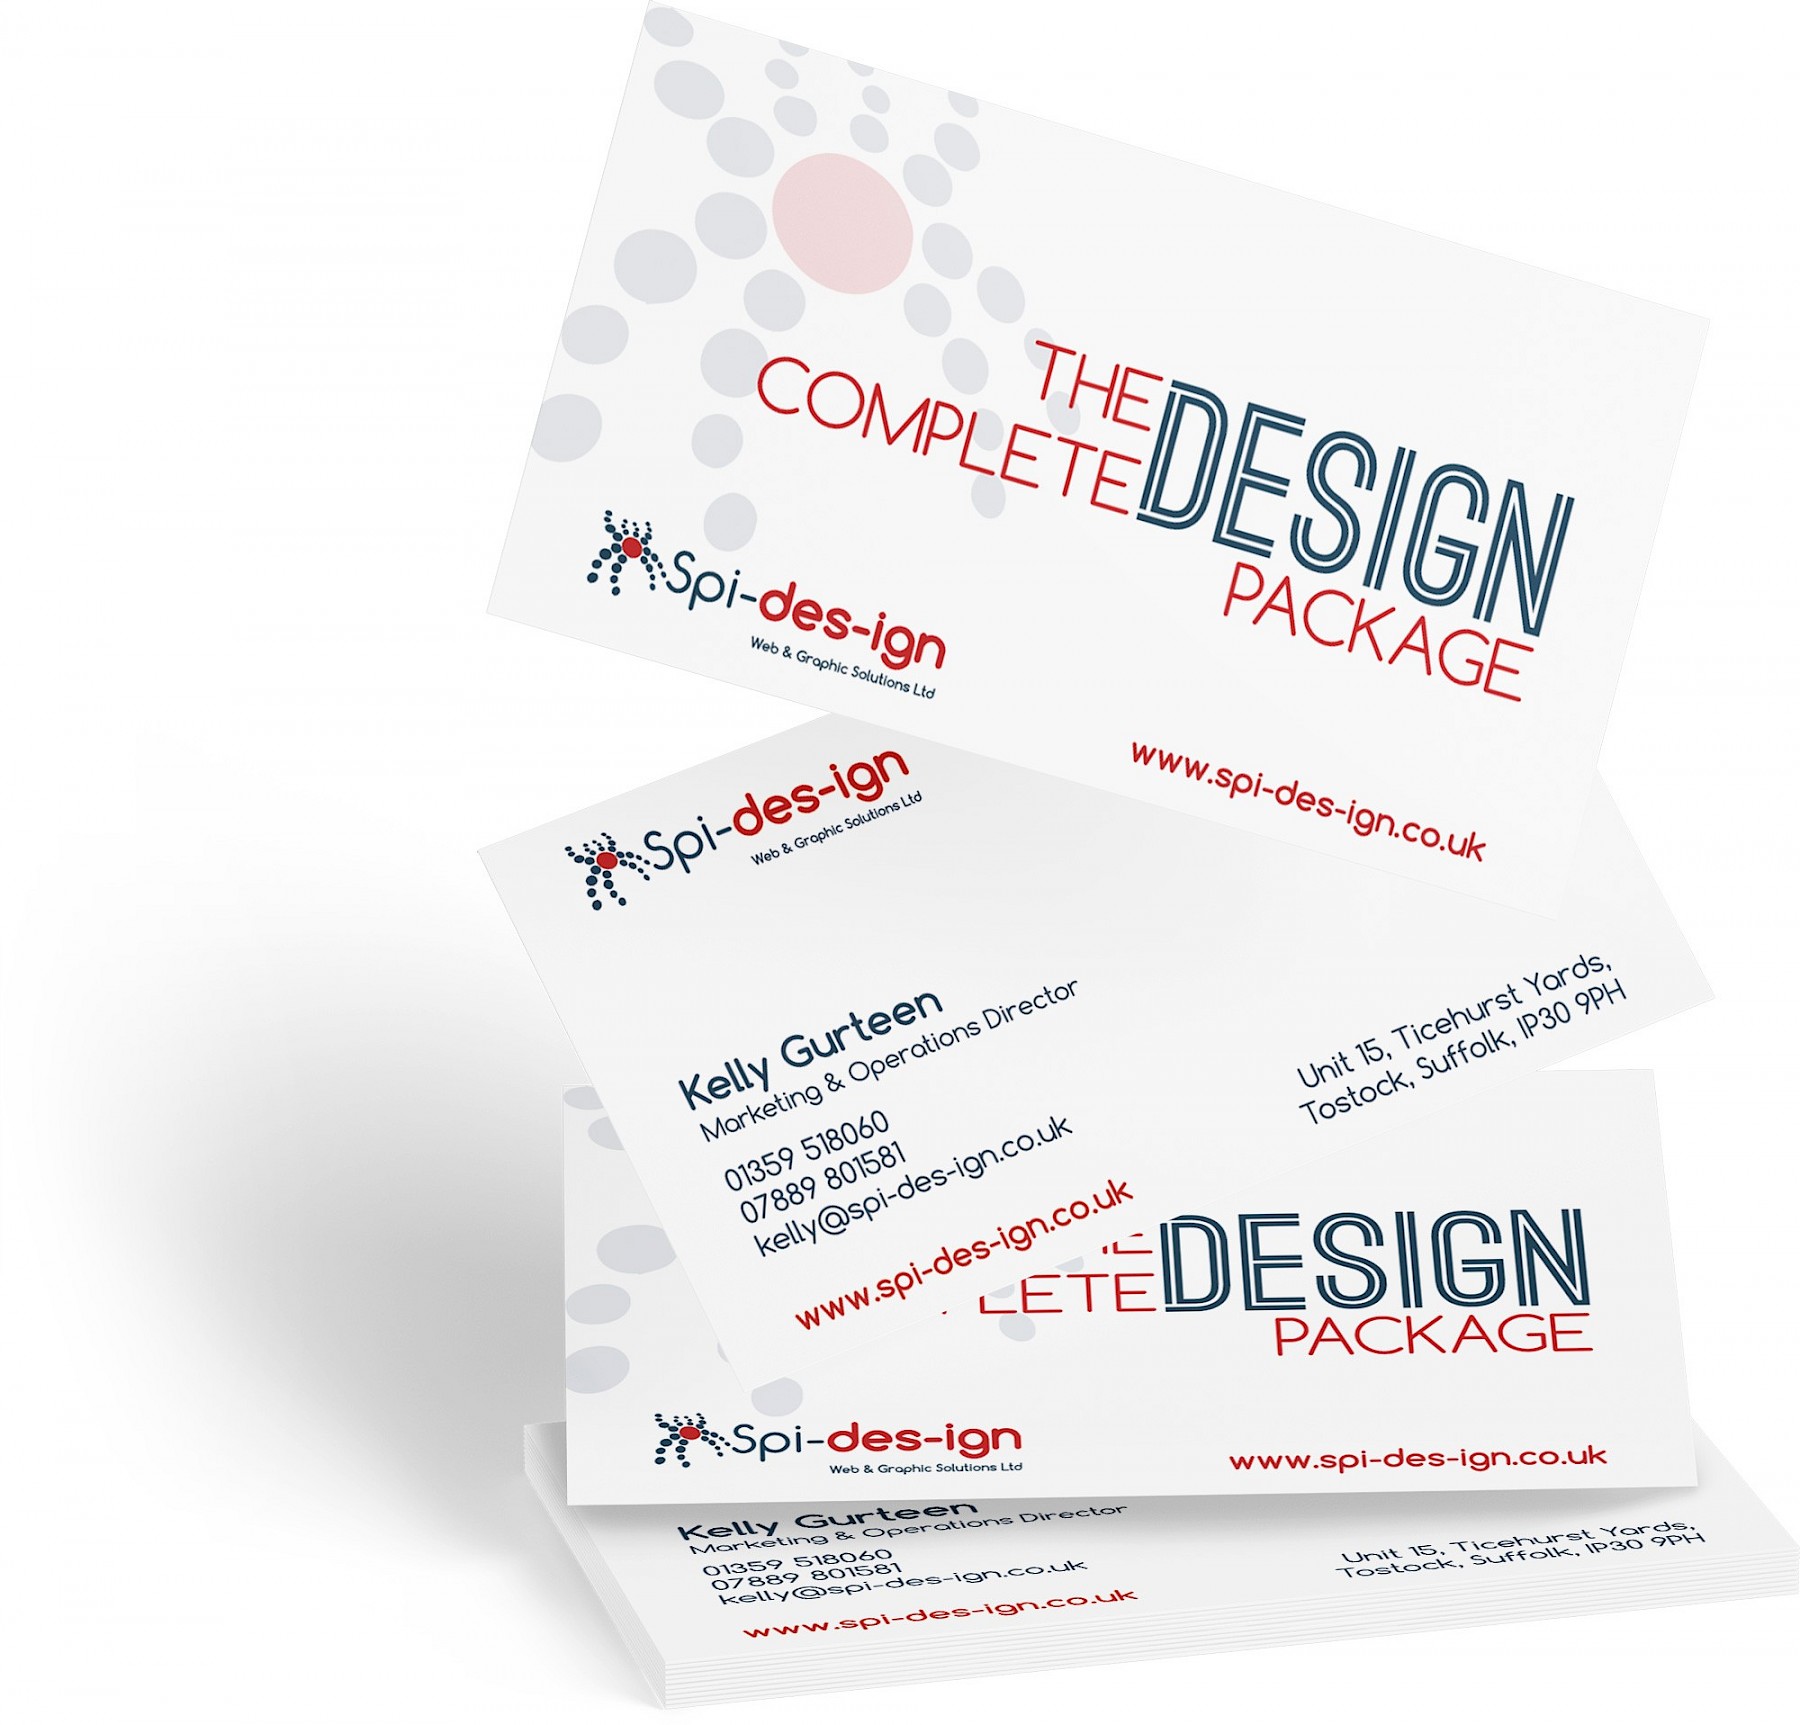 Spi-des-ign Web and Graphic Solutions Ltd